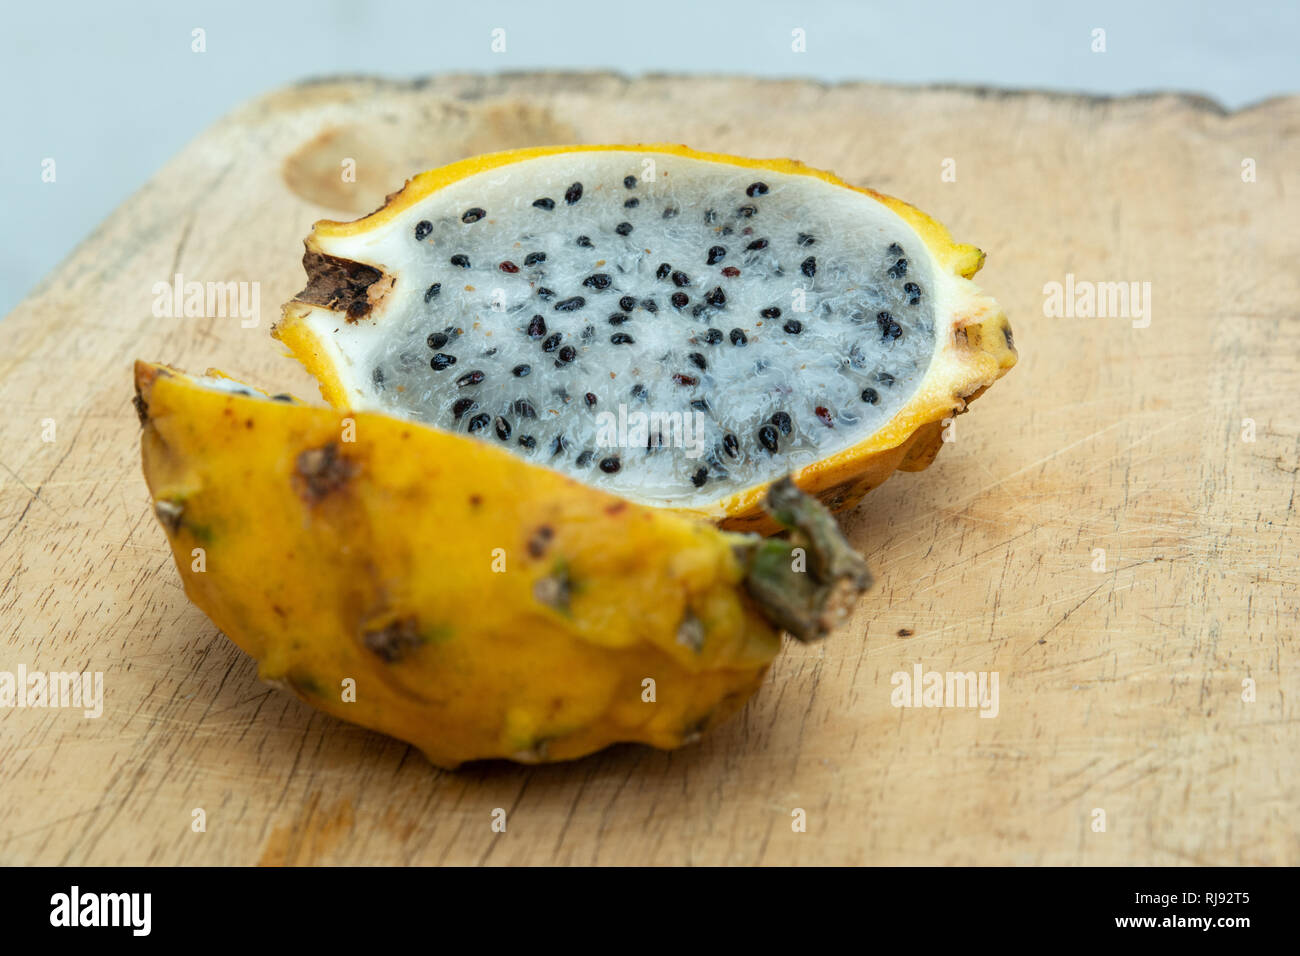 Yellow Dragon Fruit Or Pitaya Pitahaya Cut Open To Show Interior Flesh Stock Photo Alamy,Vols Animal